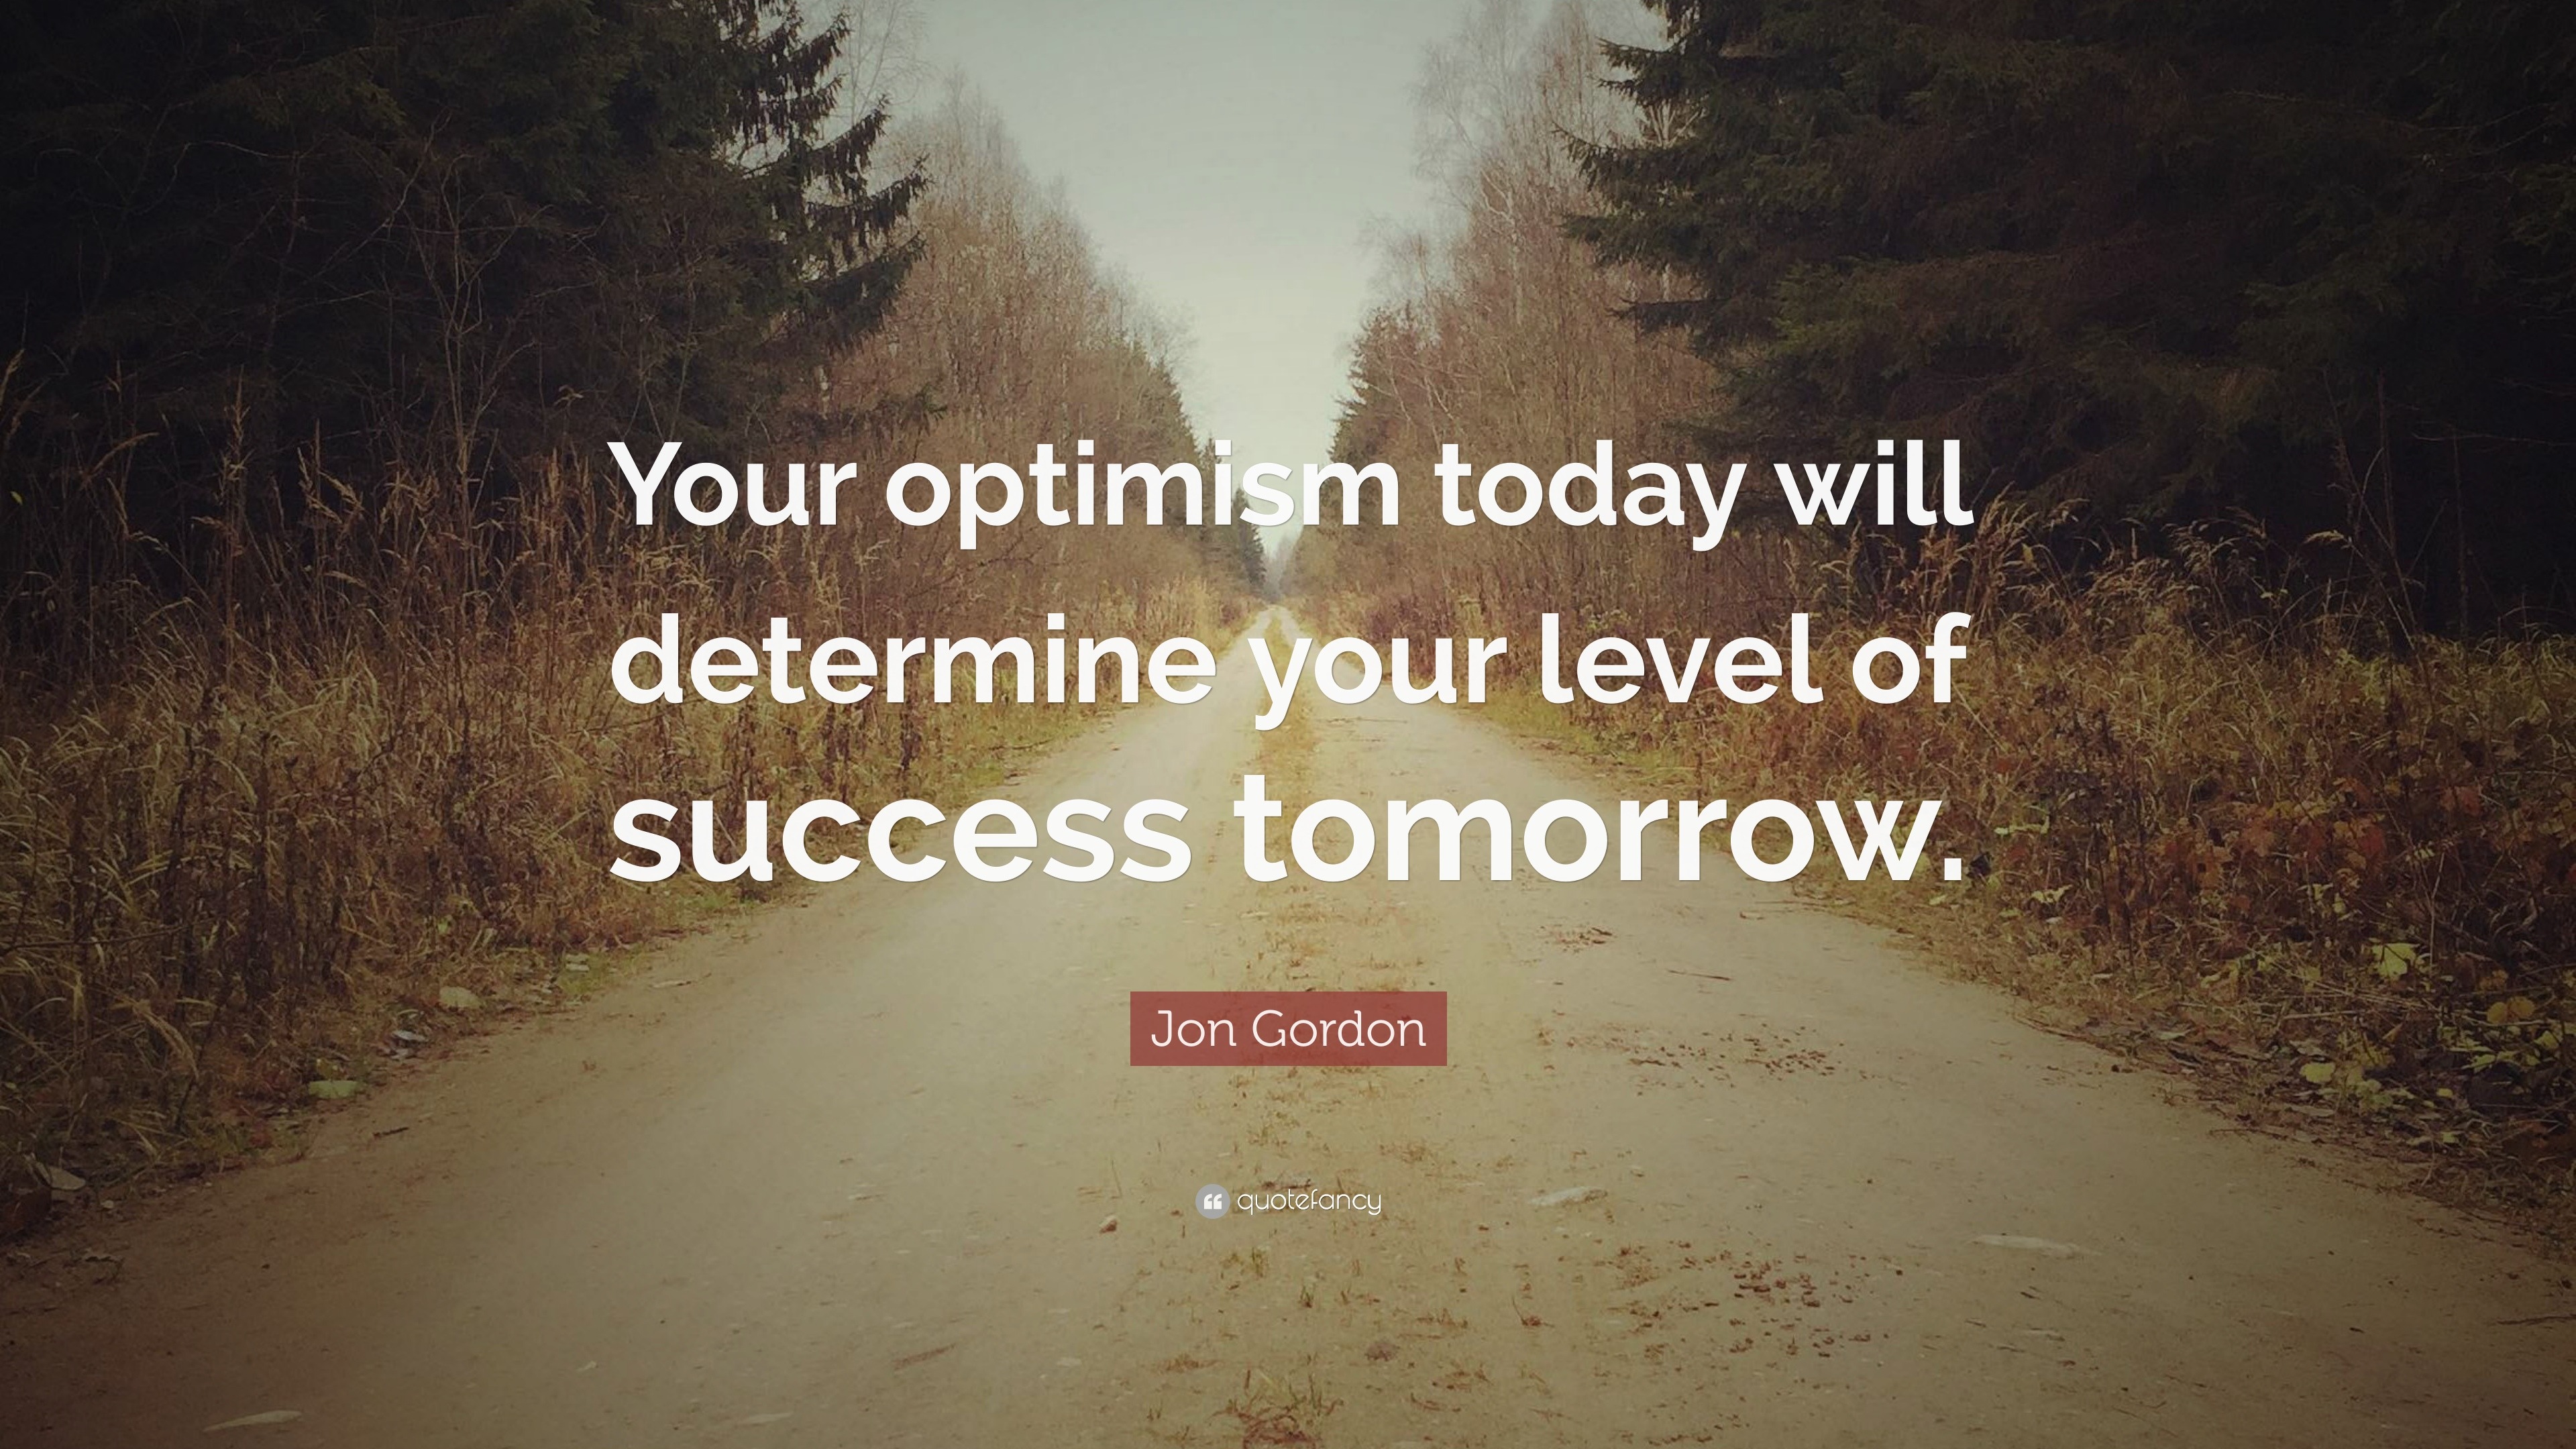 Jon Gordon Quote: “Your optimism today will determine your level of ...